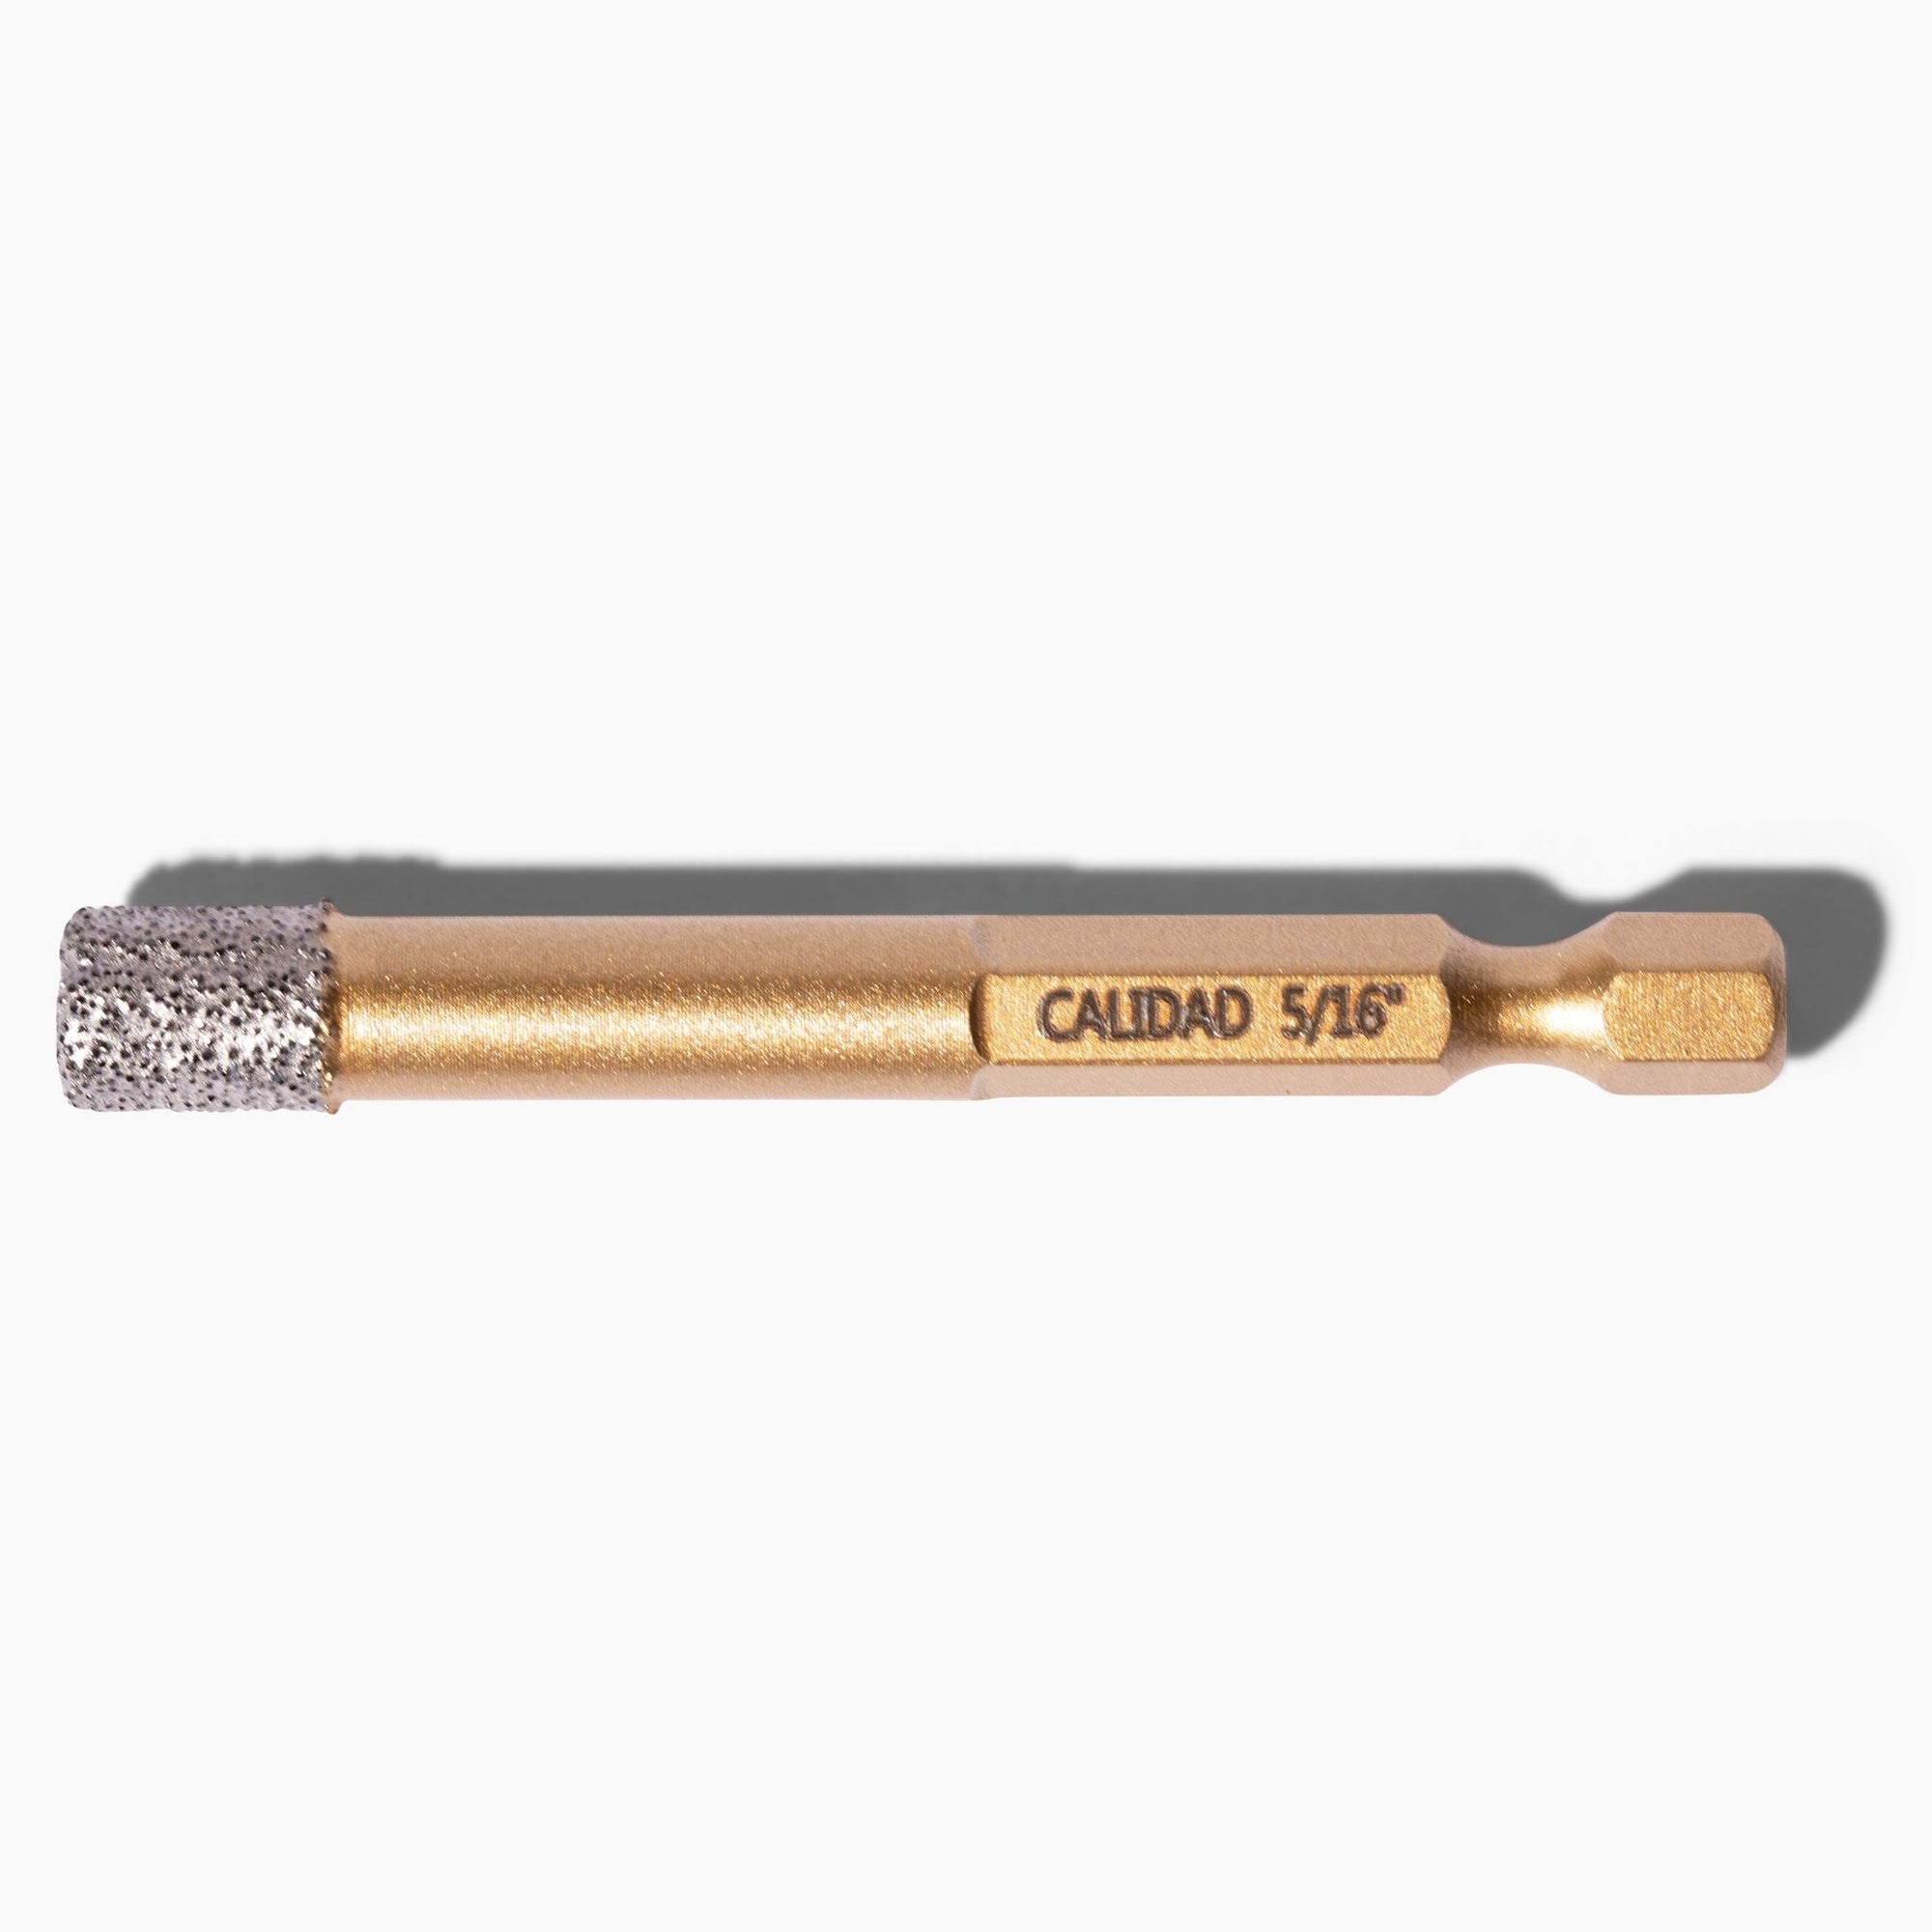 Calidad 8mm (5/16") Diamond Core Drill Bit "Needle D's 3.0" - Calidad Tools